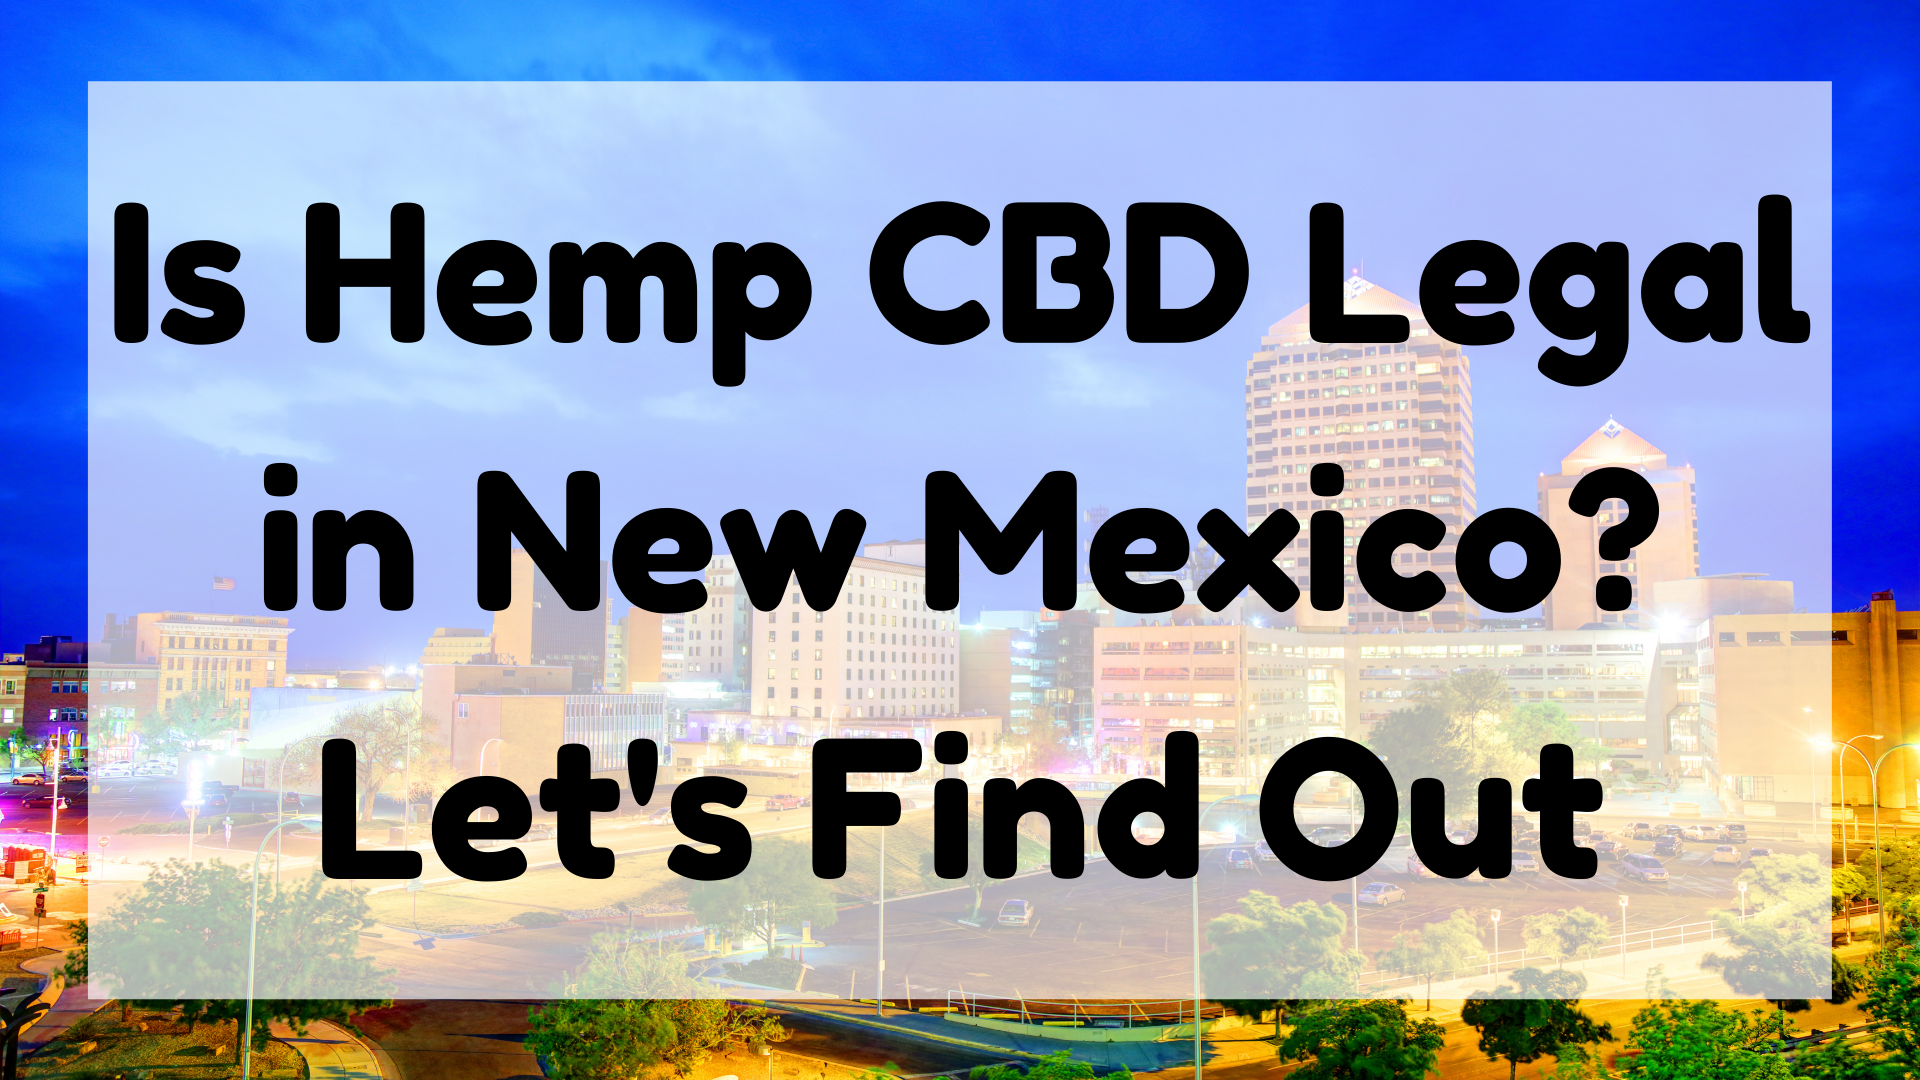 Hemp CBD Legal in New Mexico